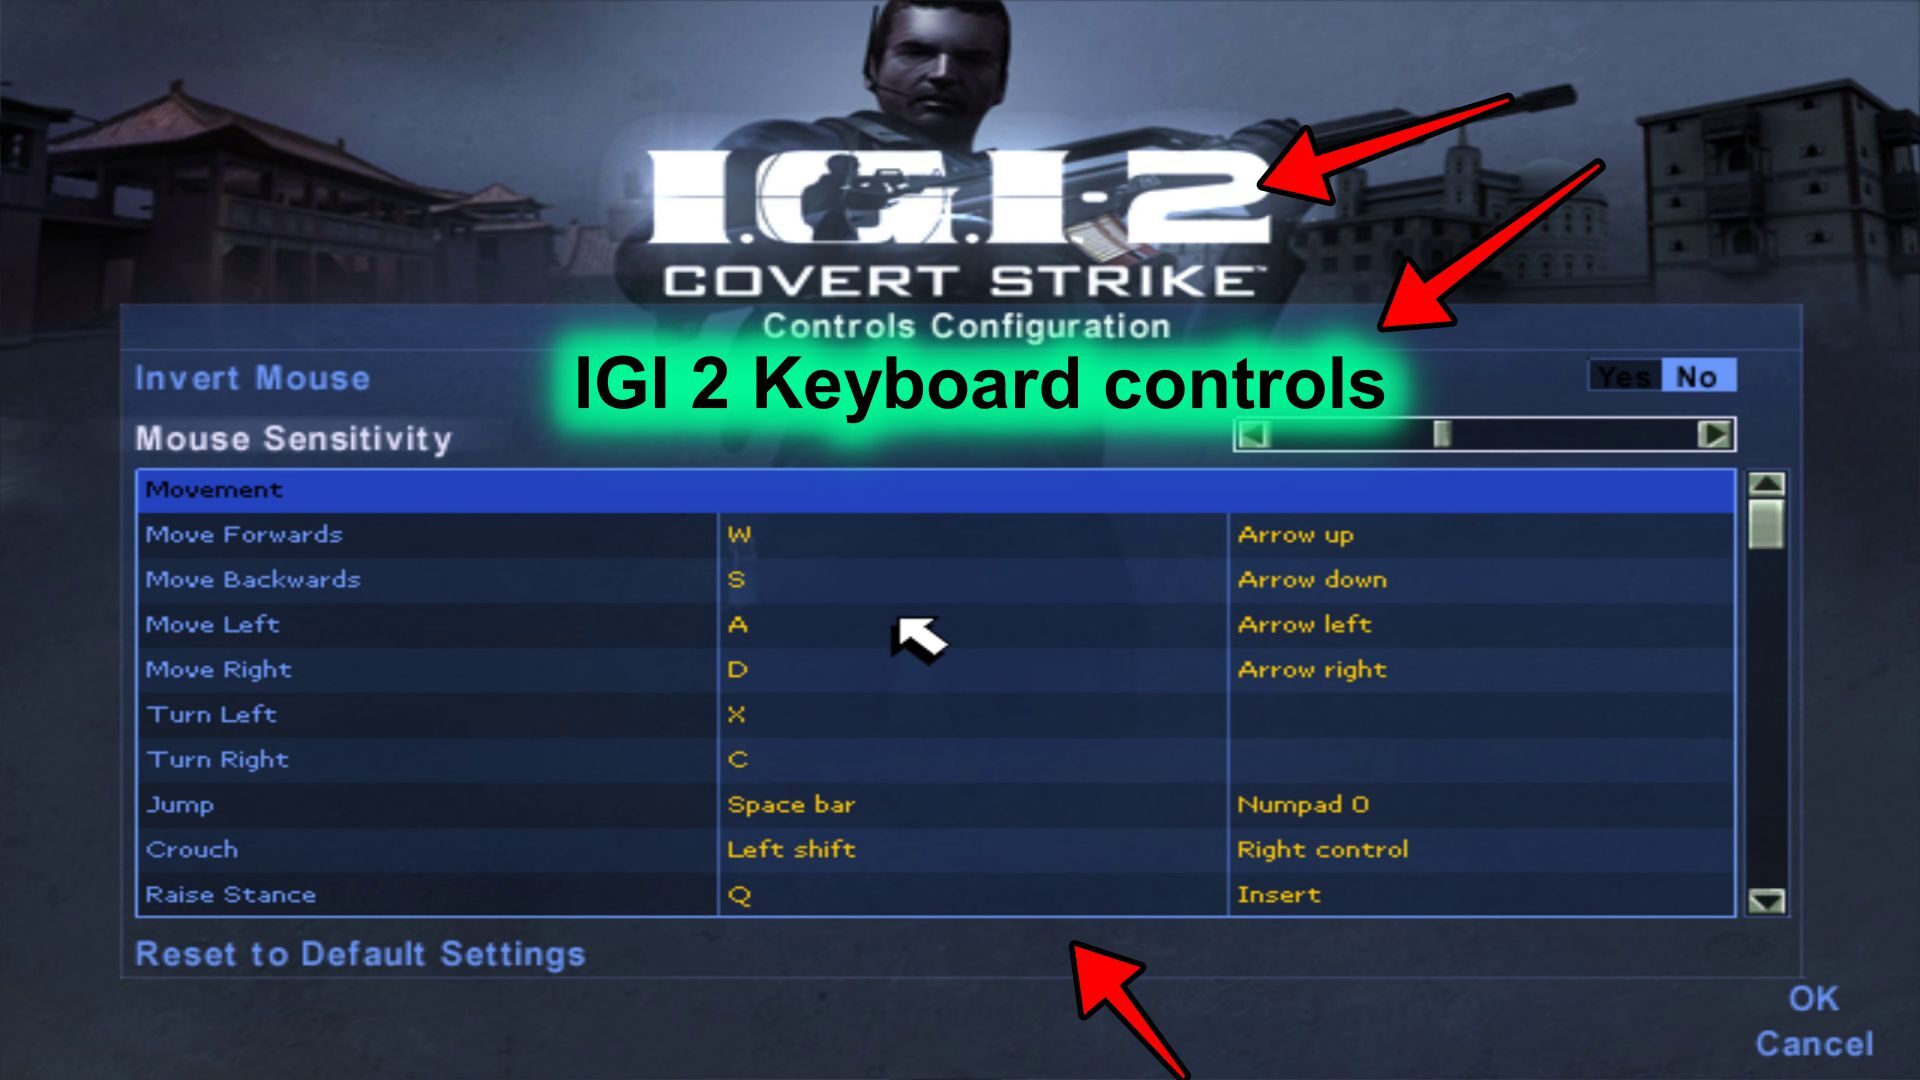 IGI 2 Keyboard Controls - Full List